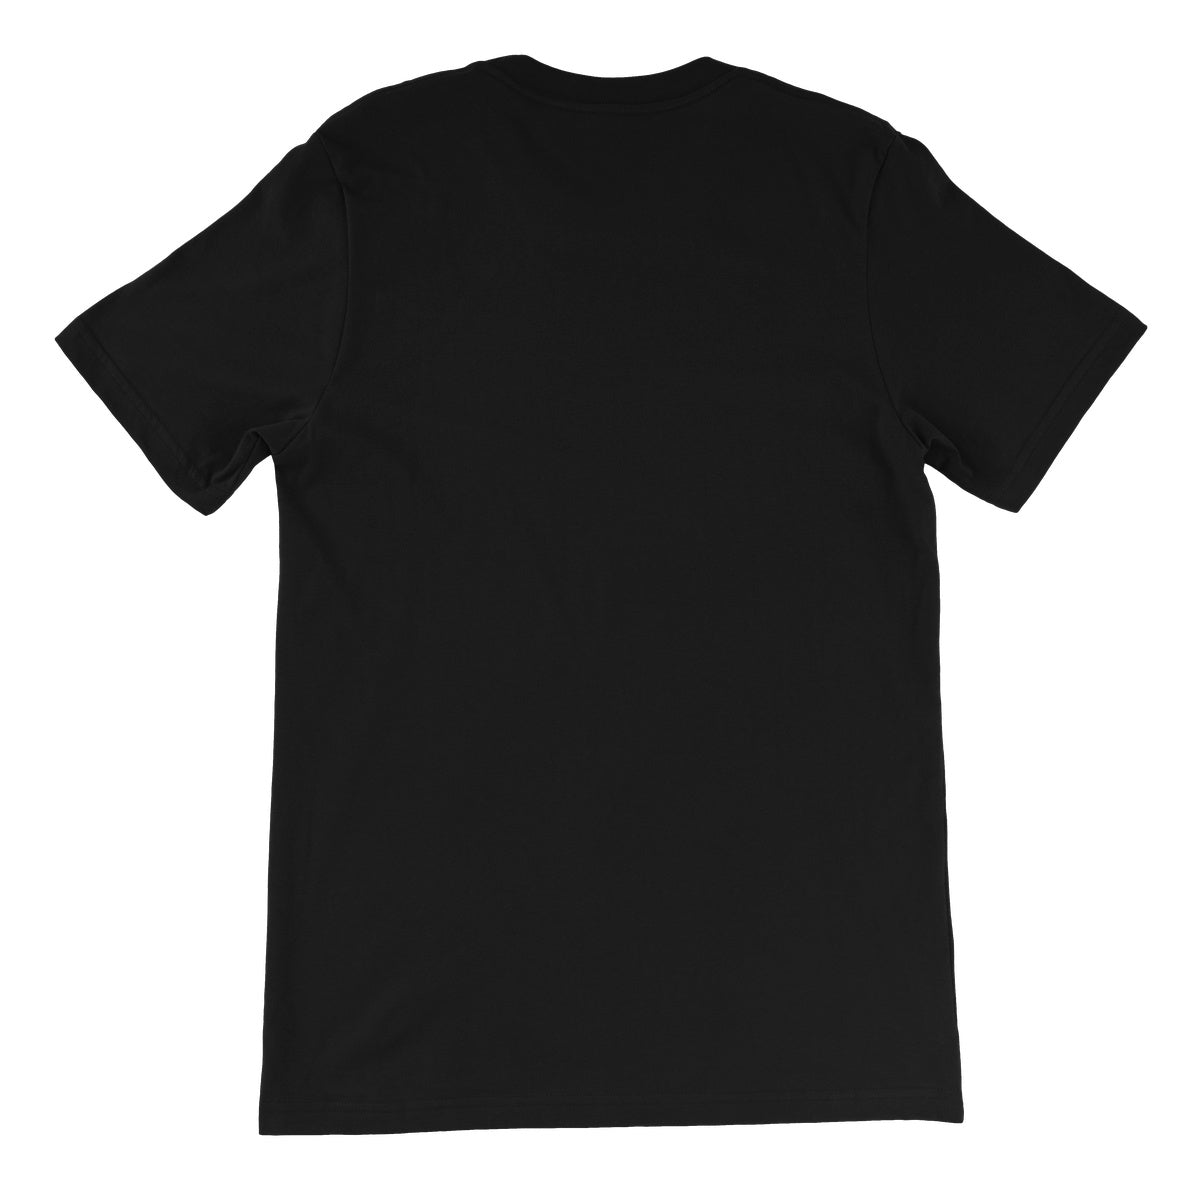 Dynamite Kid "Light The Damn Fuse" Unisex Short Sleeve T-Shirt